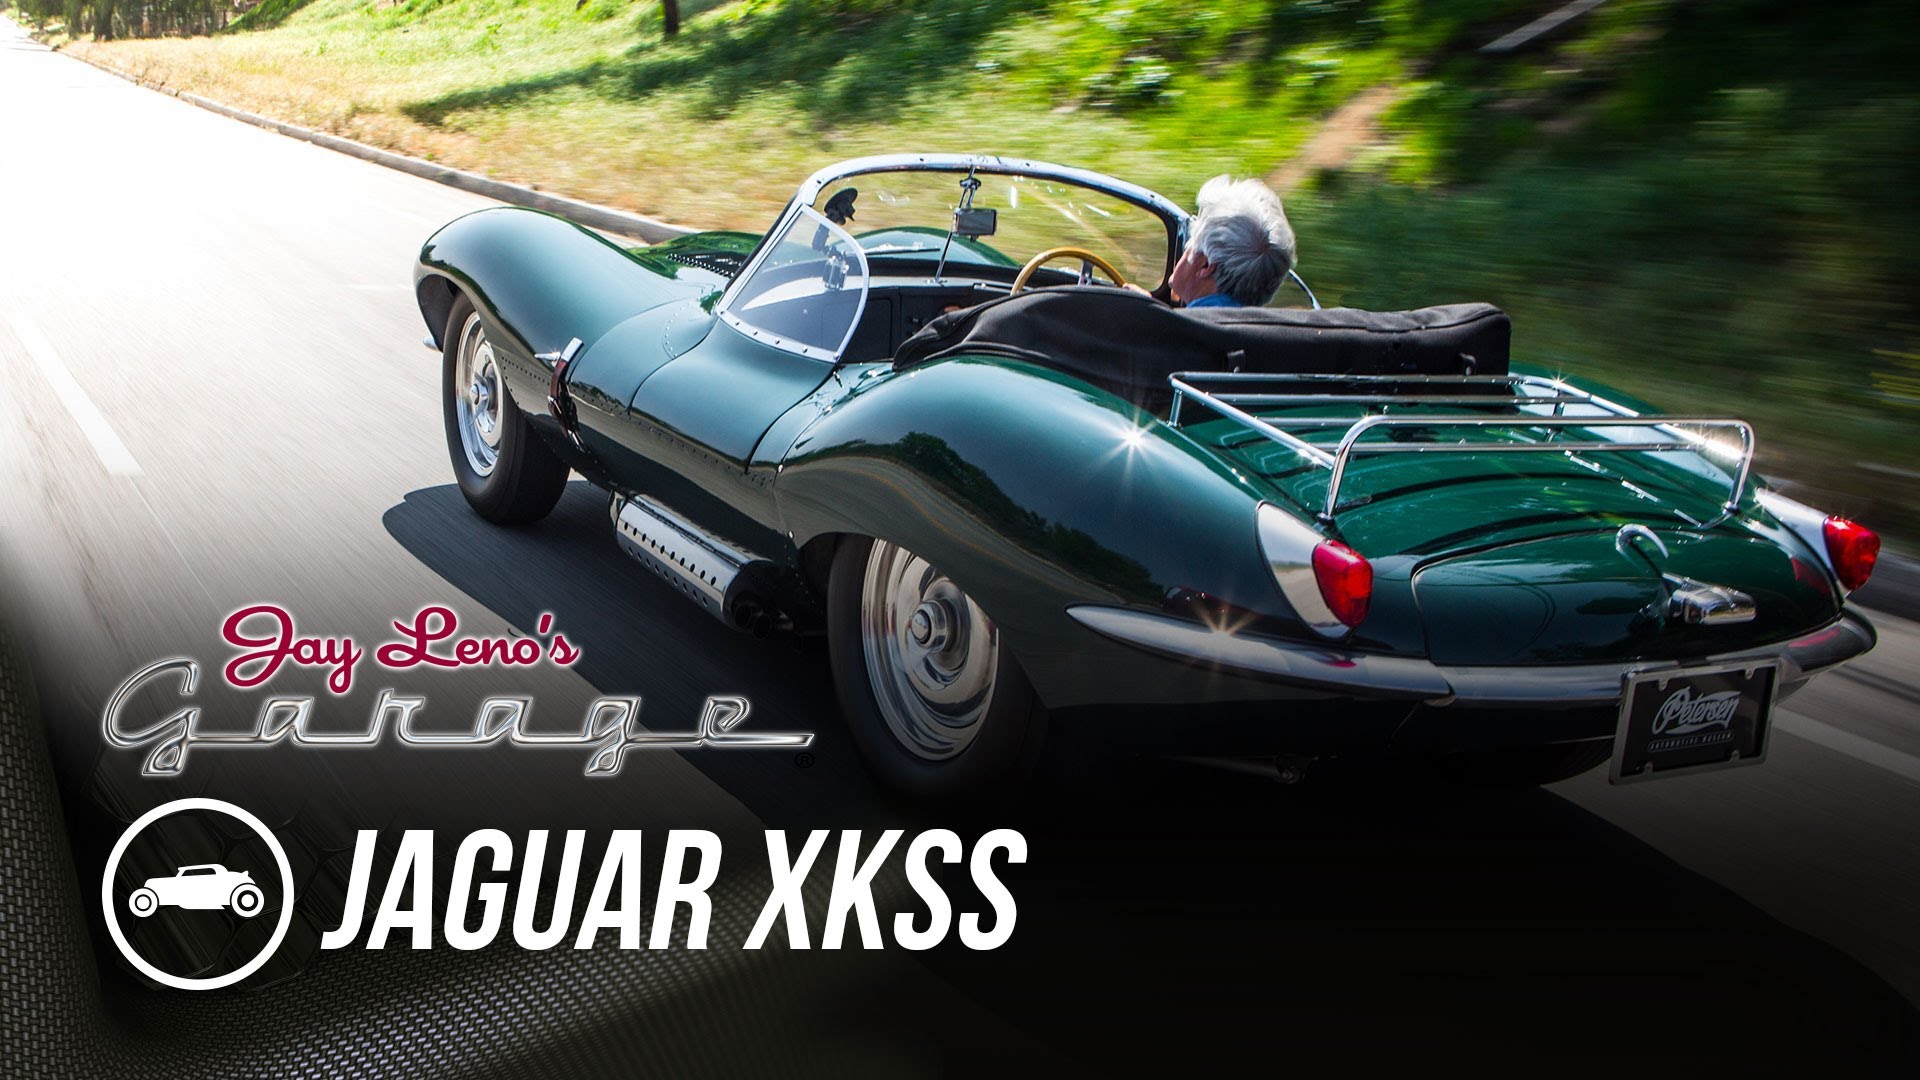 Jaguar brings the new XKSS to Jay Leno’s Garage